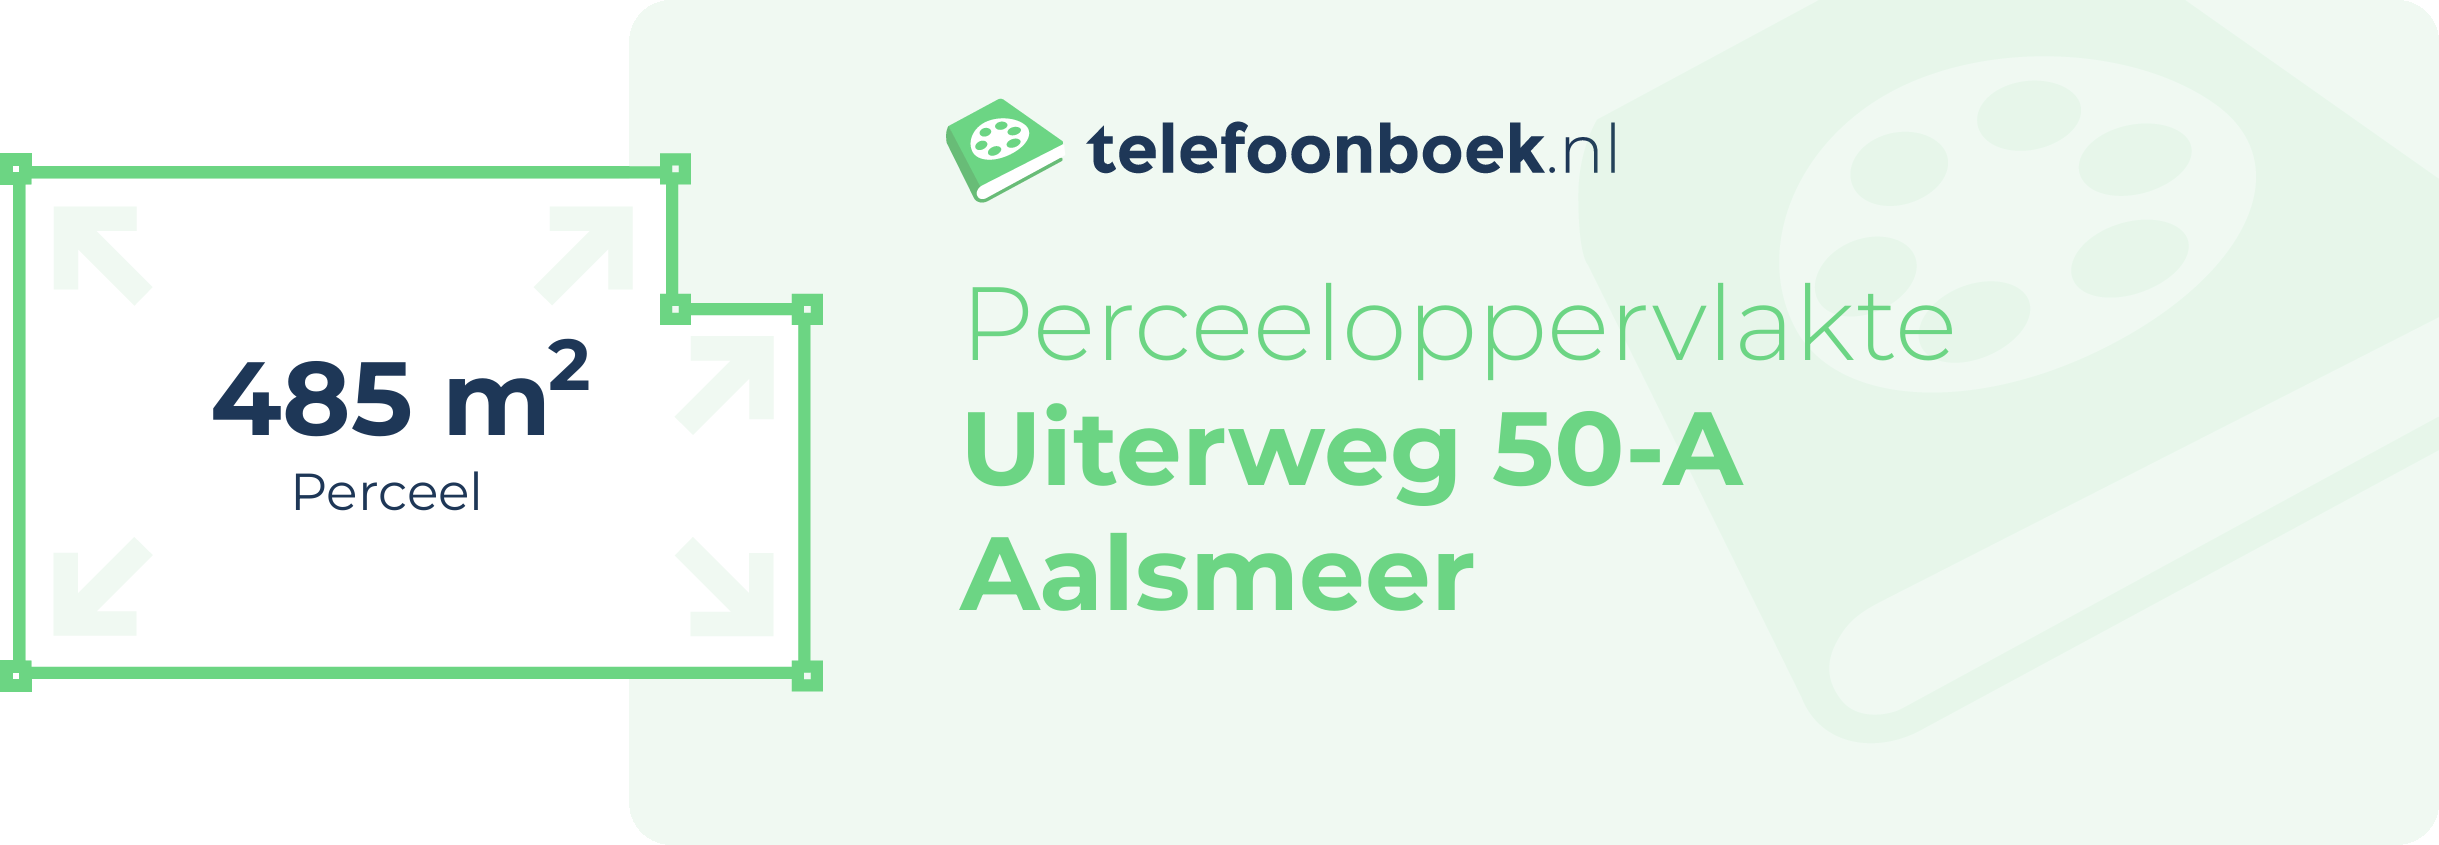 Perceeloppervlakte Uiterweg 50-A Aalsmeer